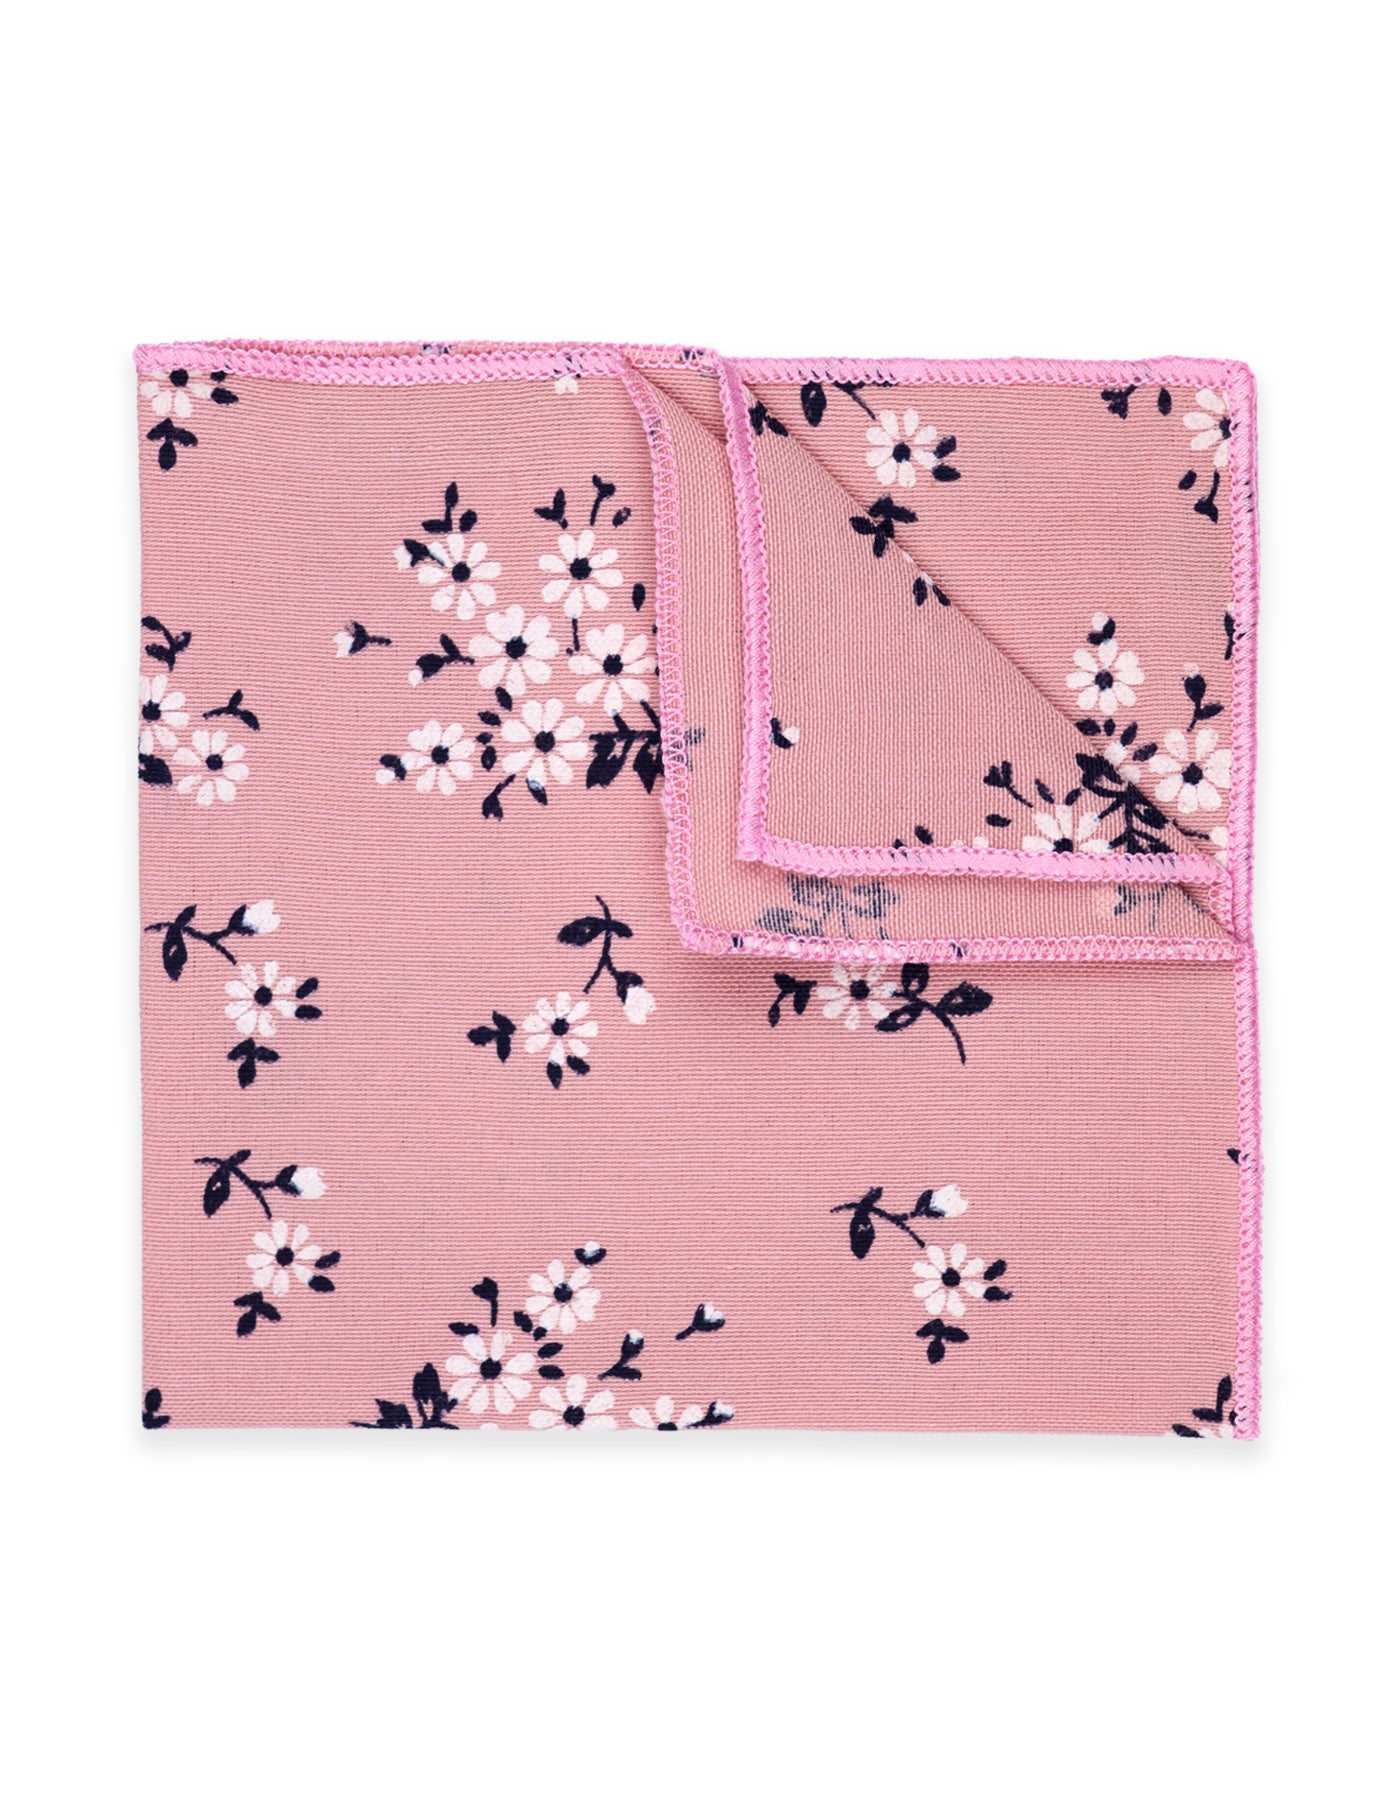 100% Cotton Floral Print Tie - Pink & Navy